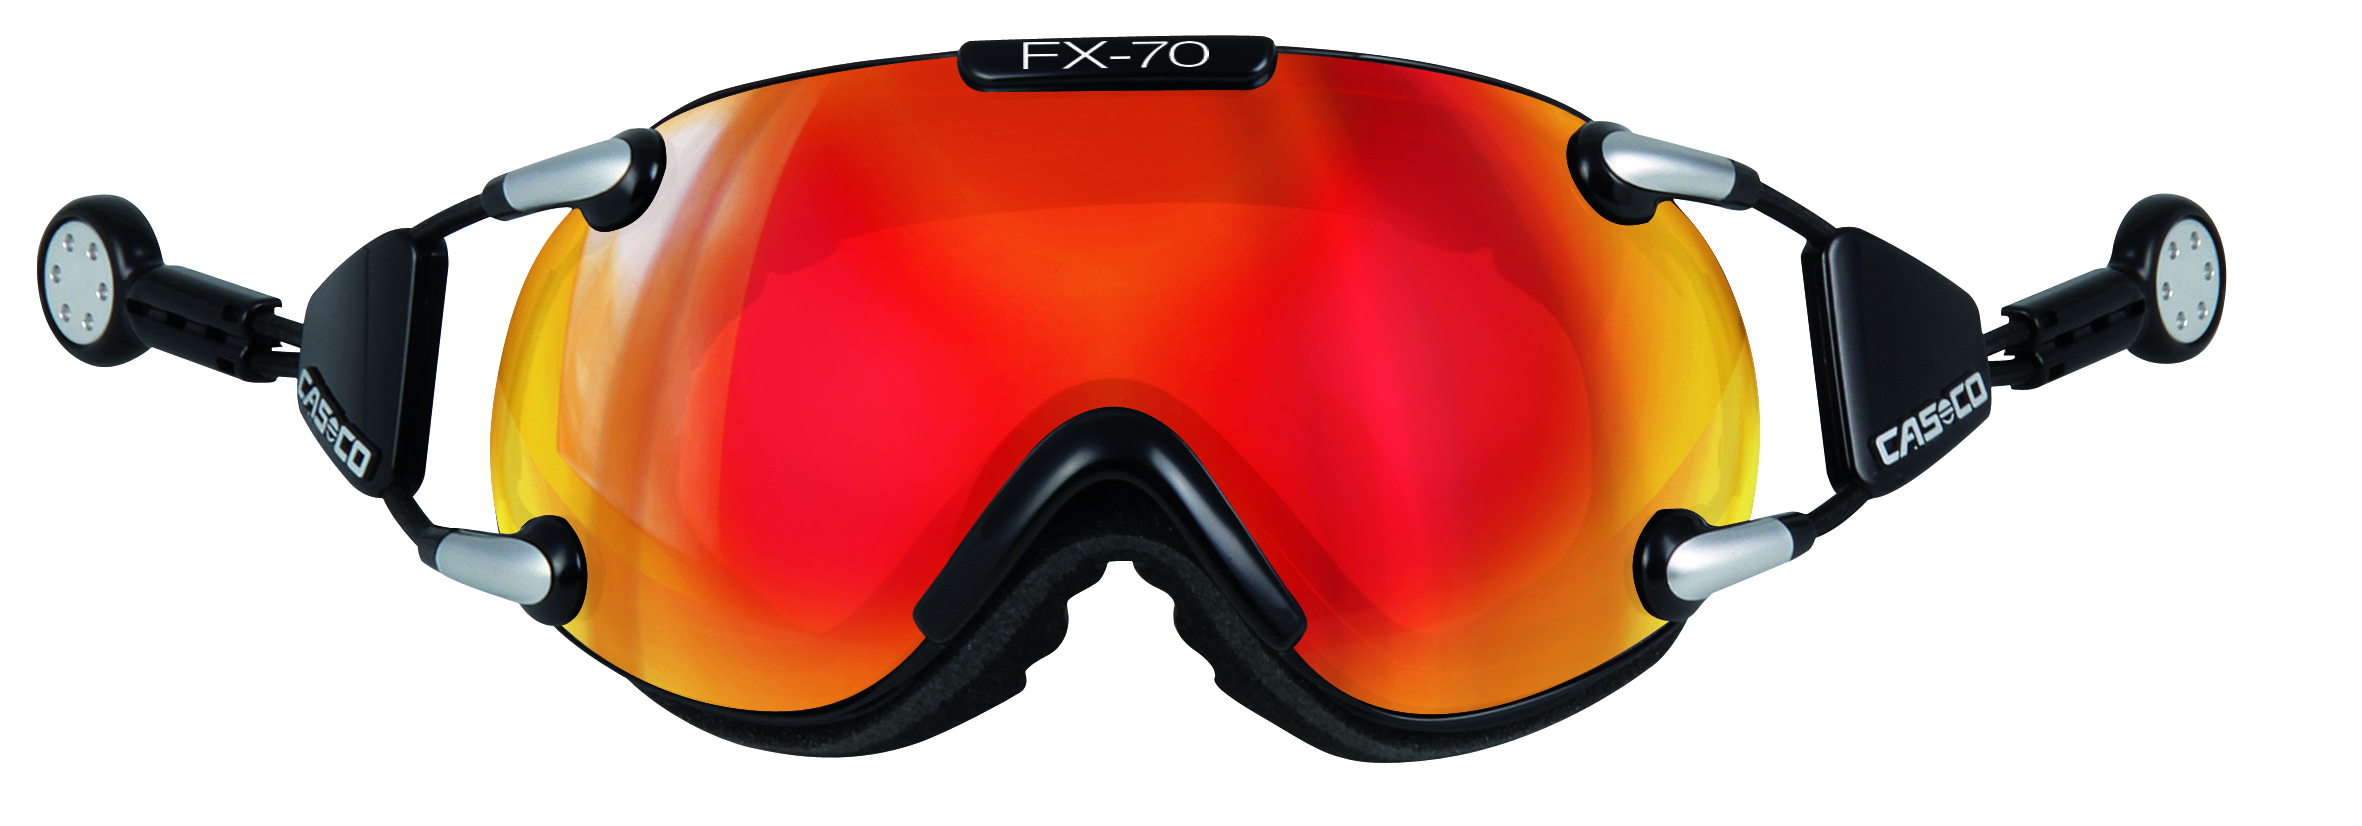 Casco FX-70 Carbonic Skibrille 